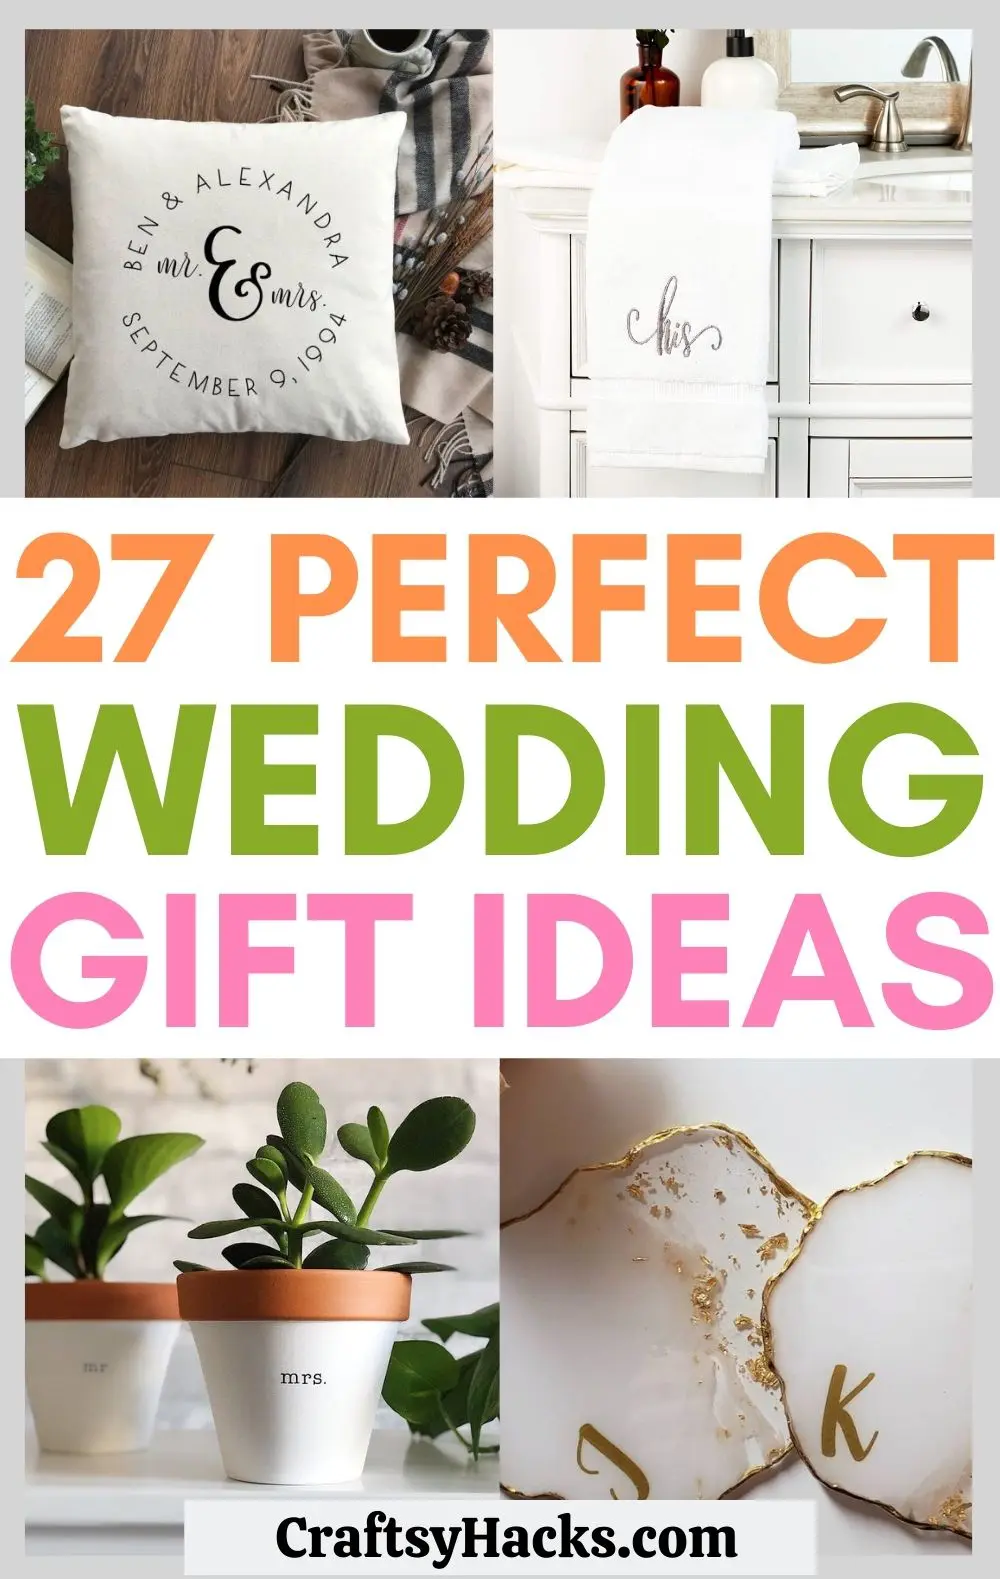 12 Wedding Gift Ideas to Stun Your Newlywed Friends   Craftsy Hacks